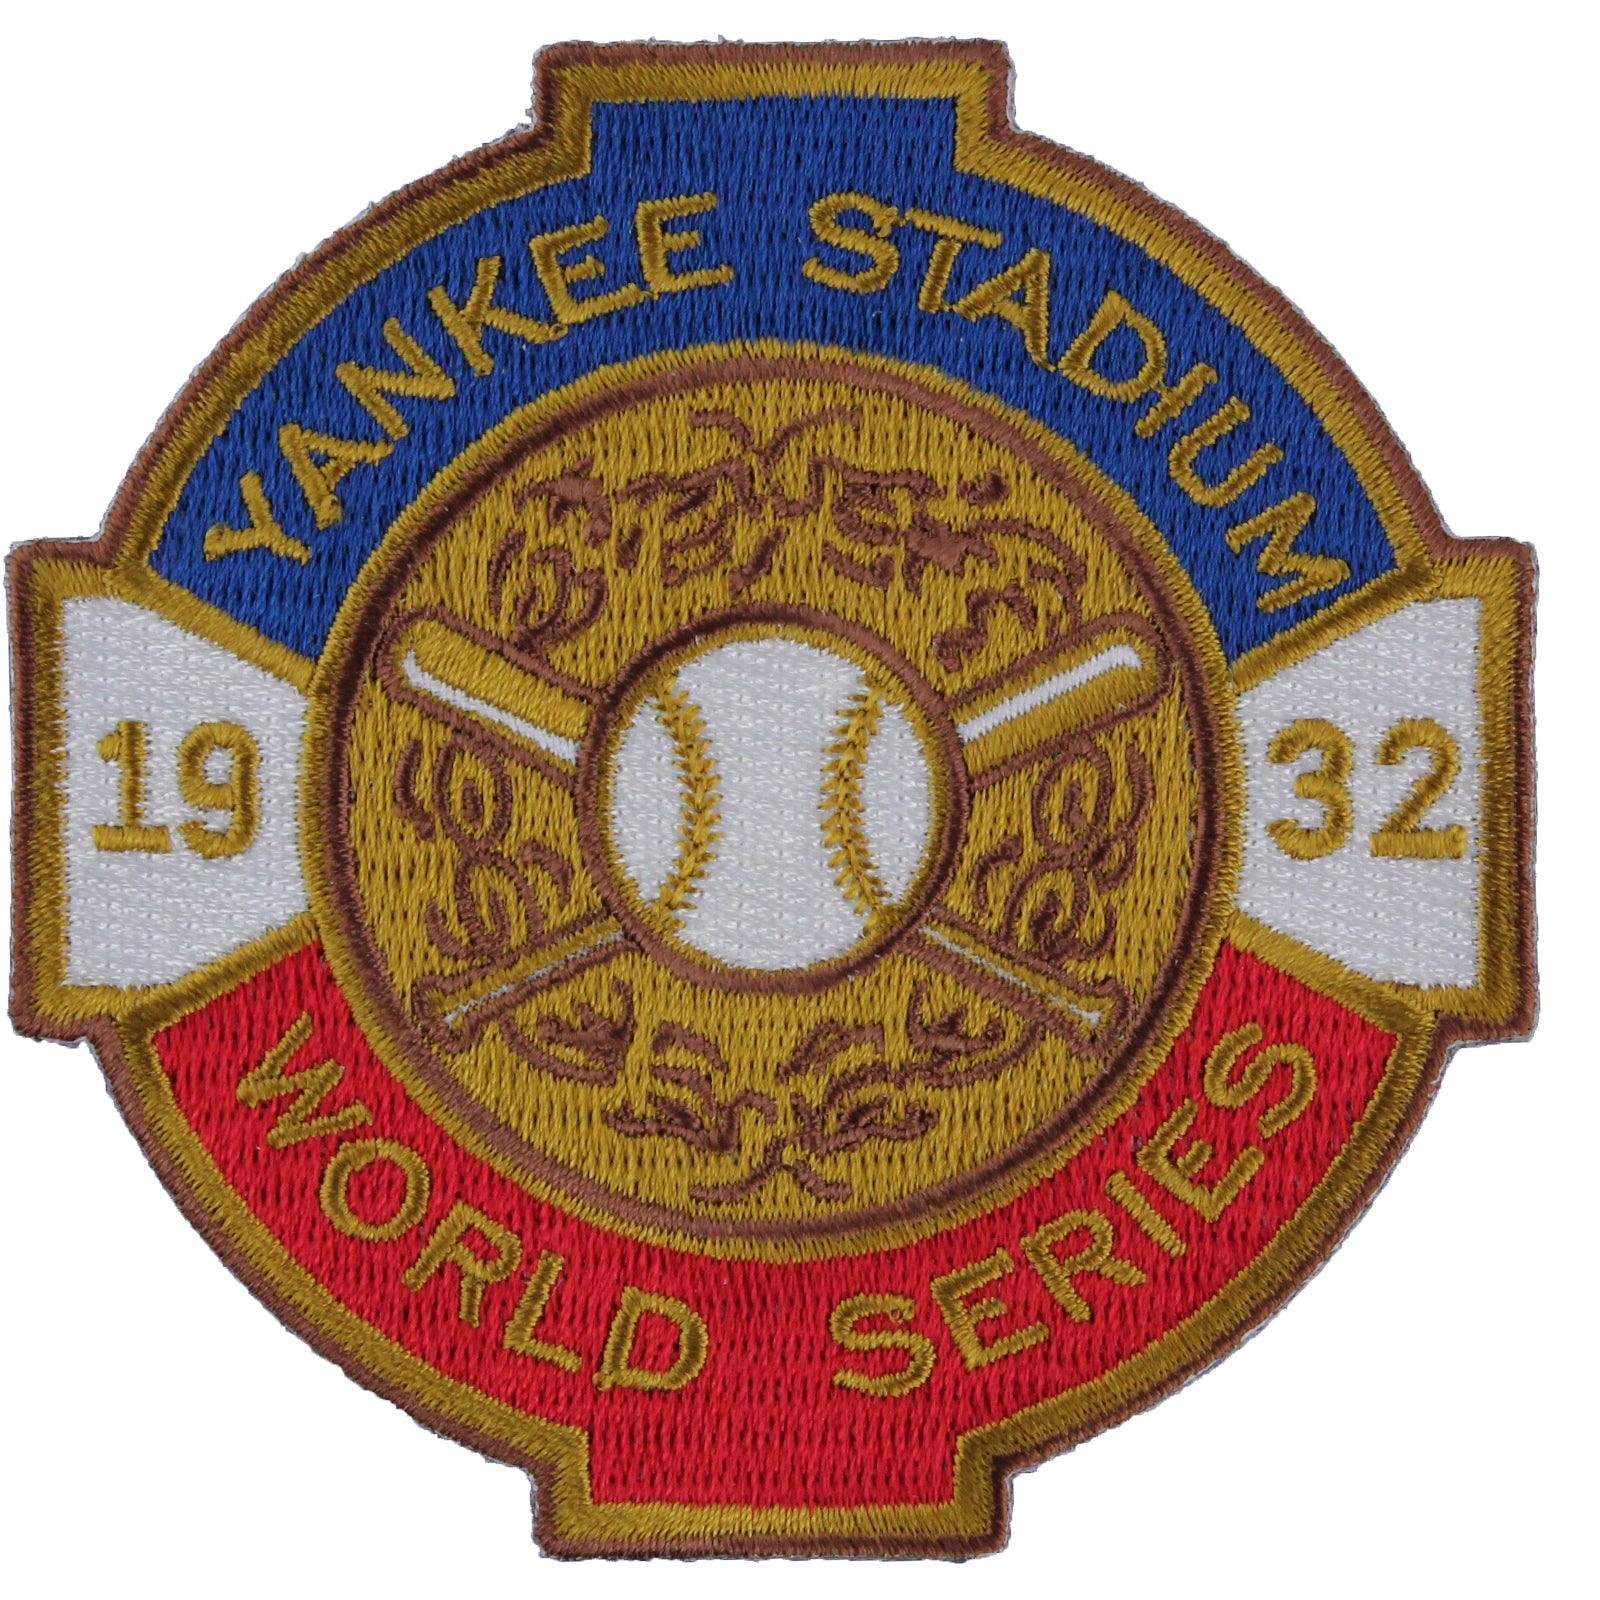 New York Yankees 1941 World Series Championship Patch – The Emblem